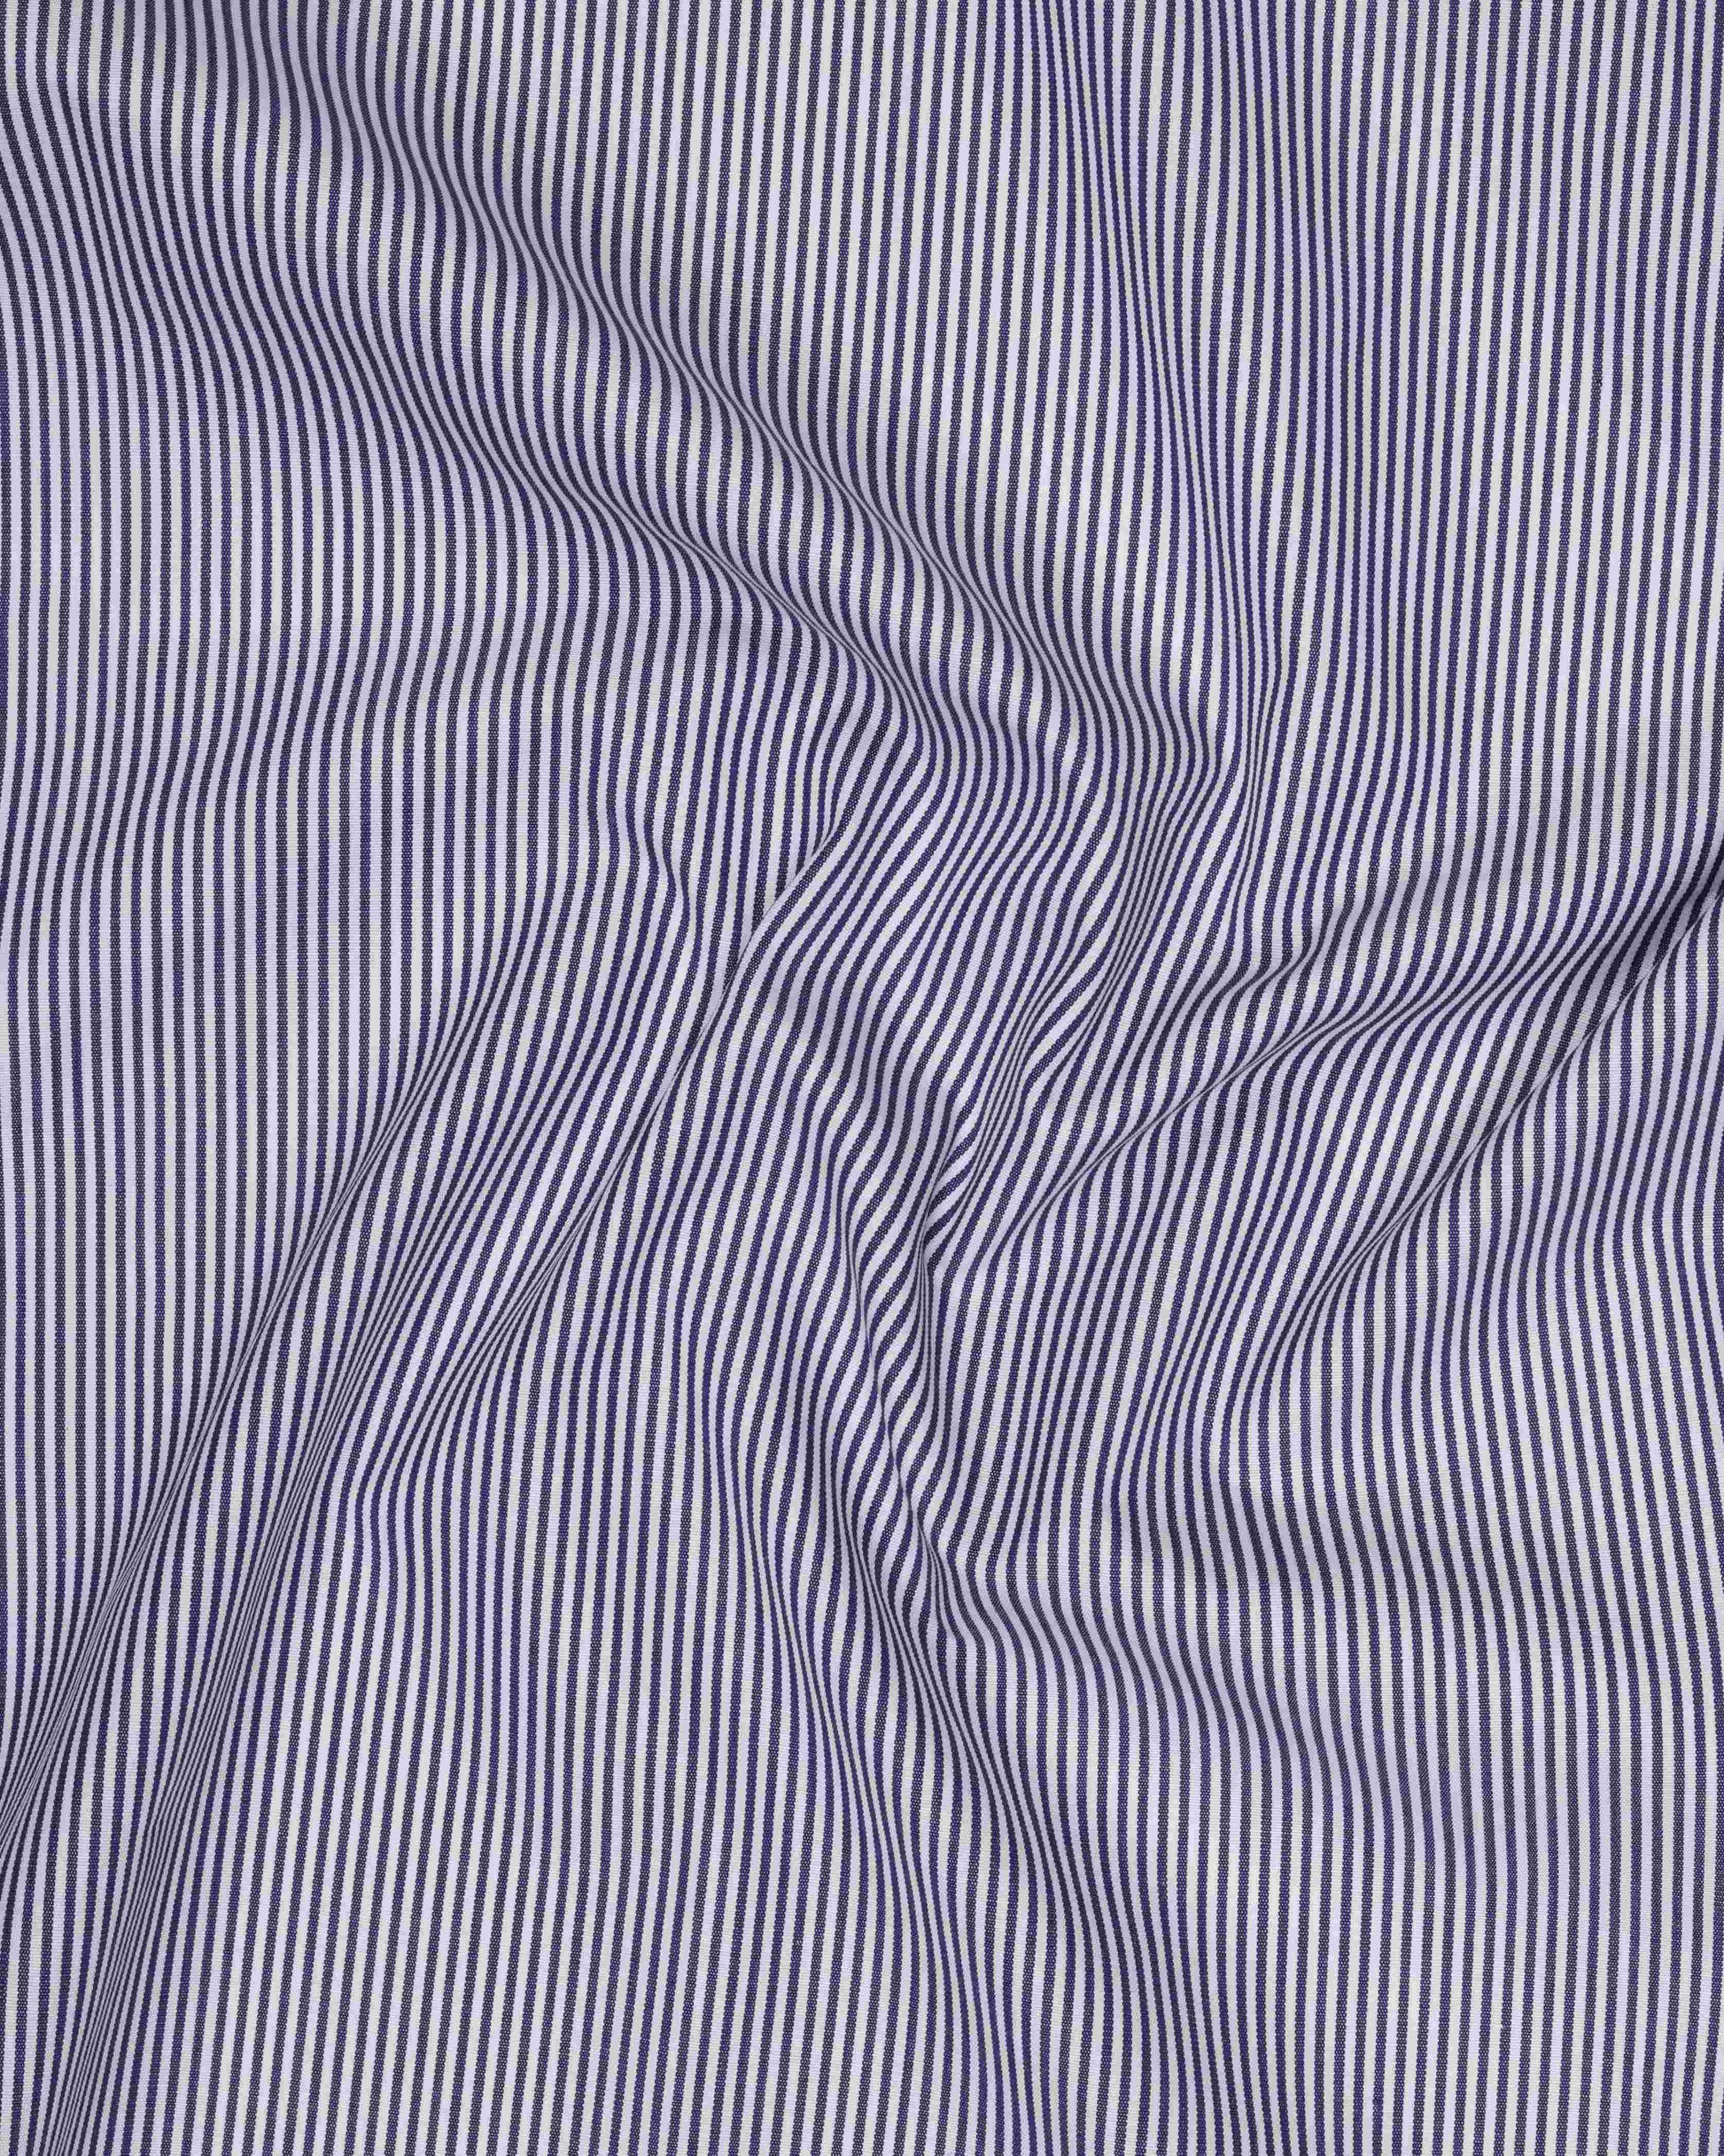 White & navy blue stripes shirt